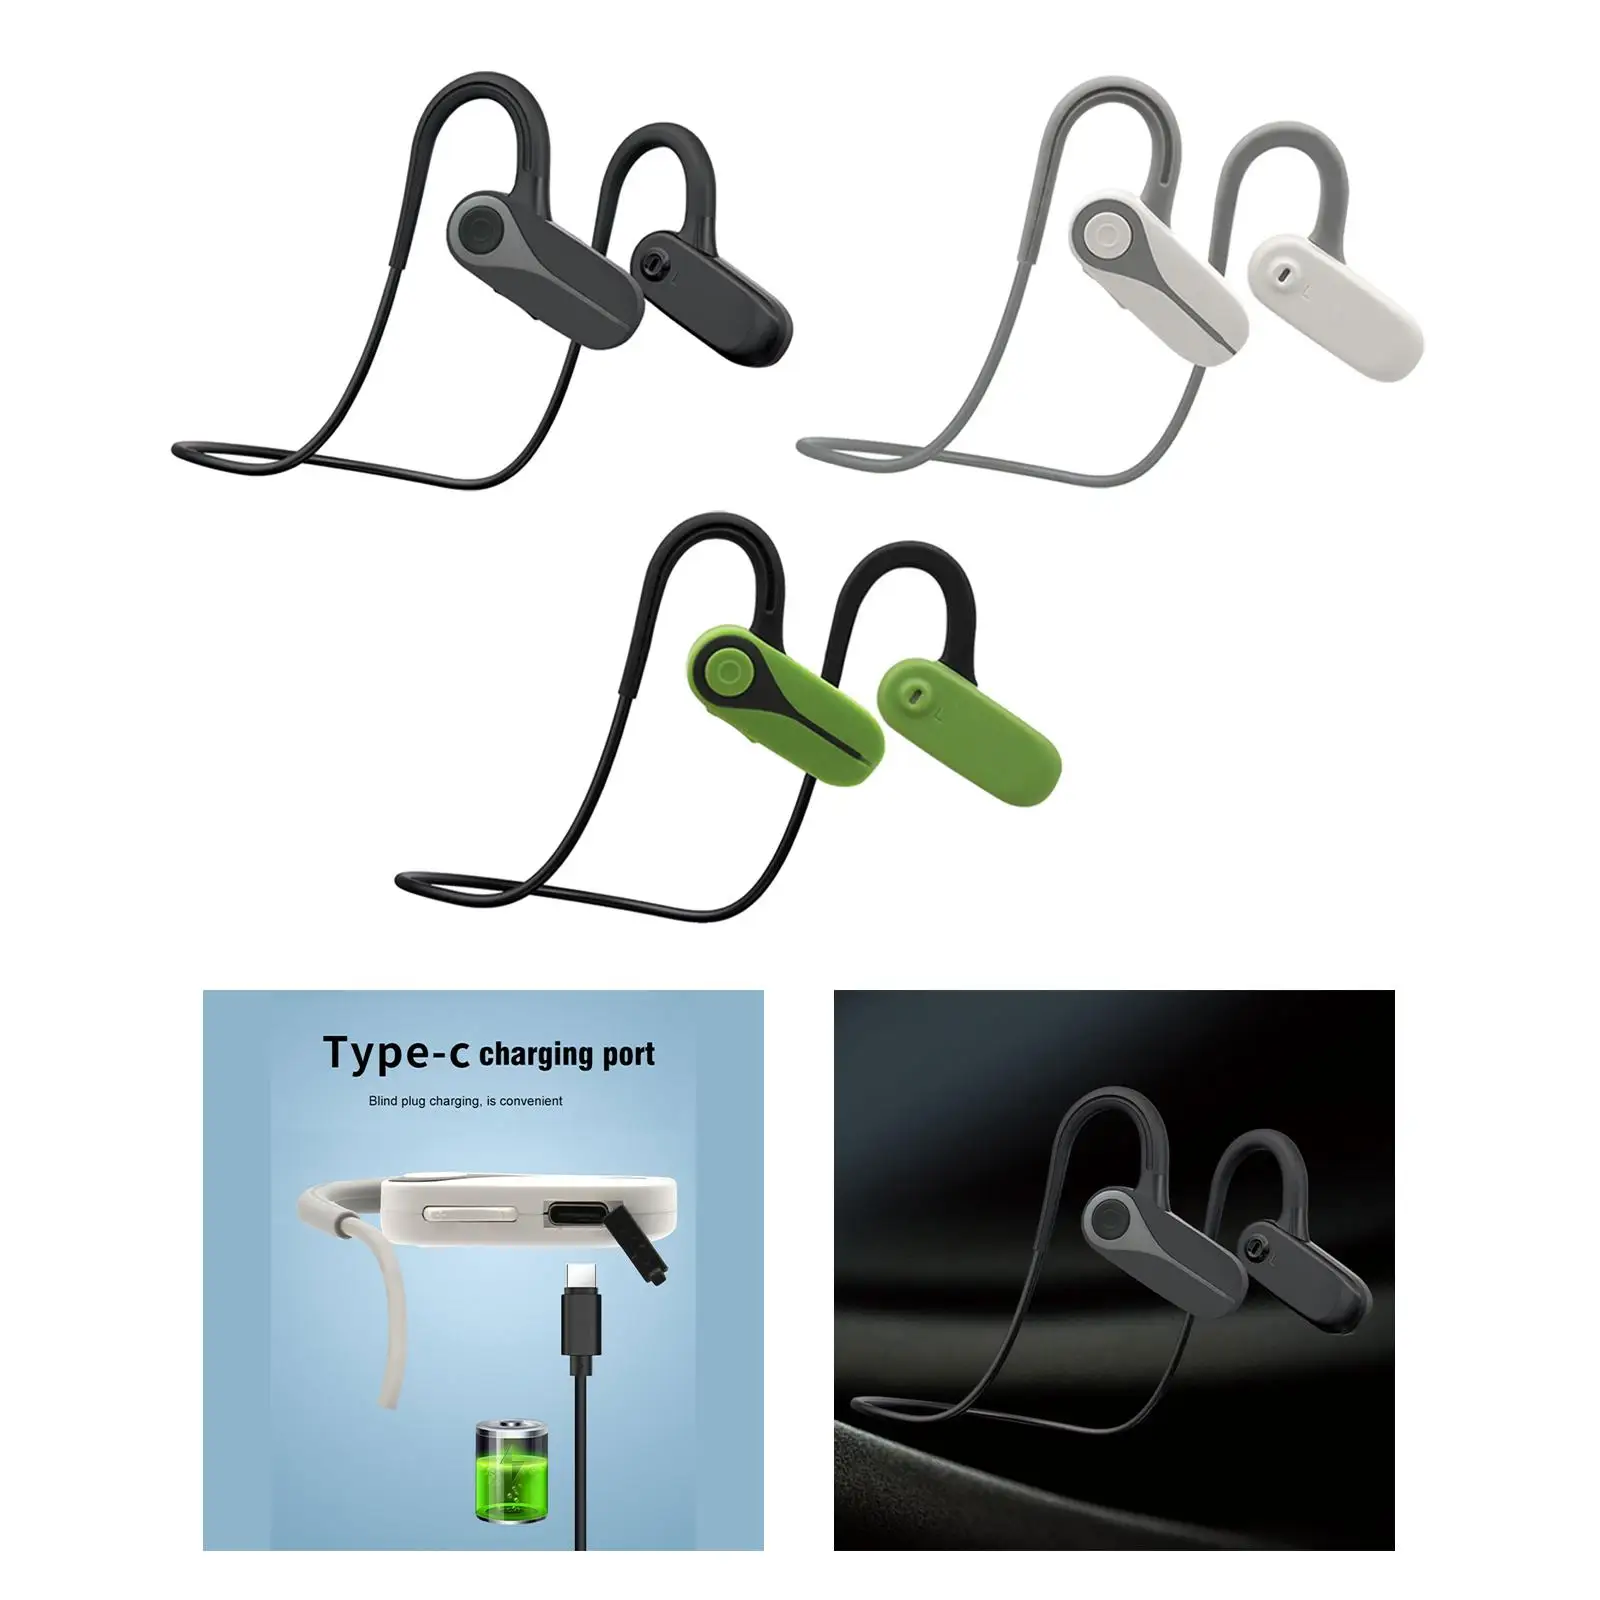 Bones Conduction Headphones HD Stereo Microphone Waterproof Sport Earphones for Driving